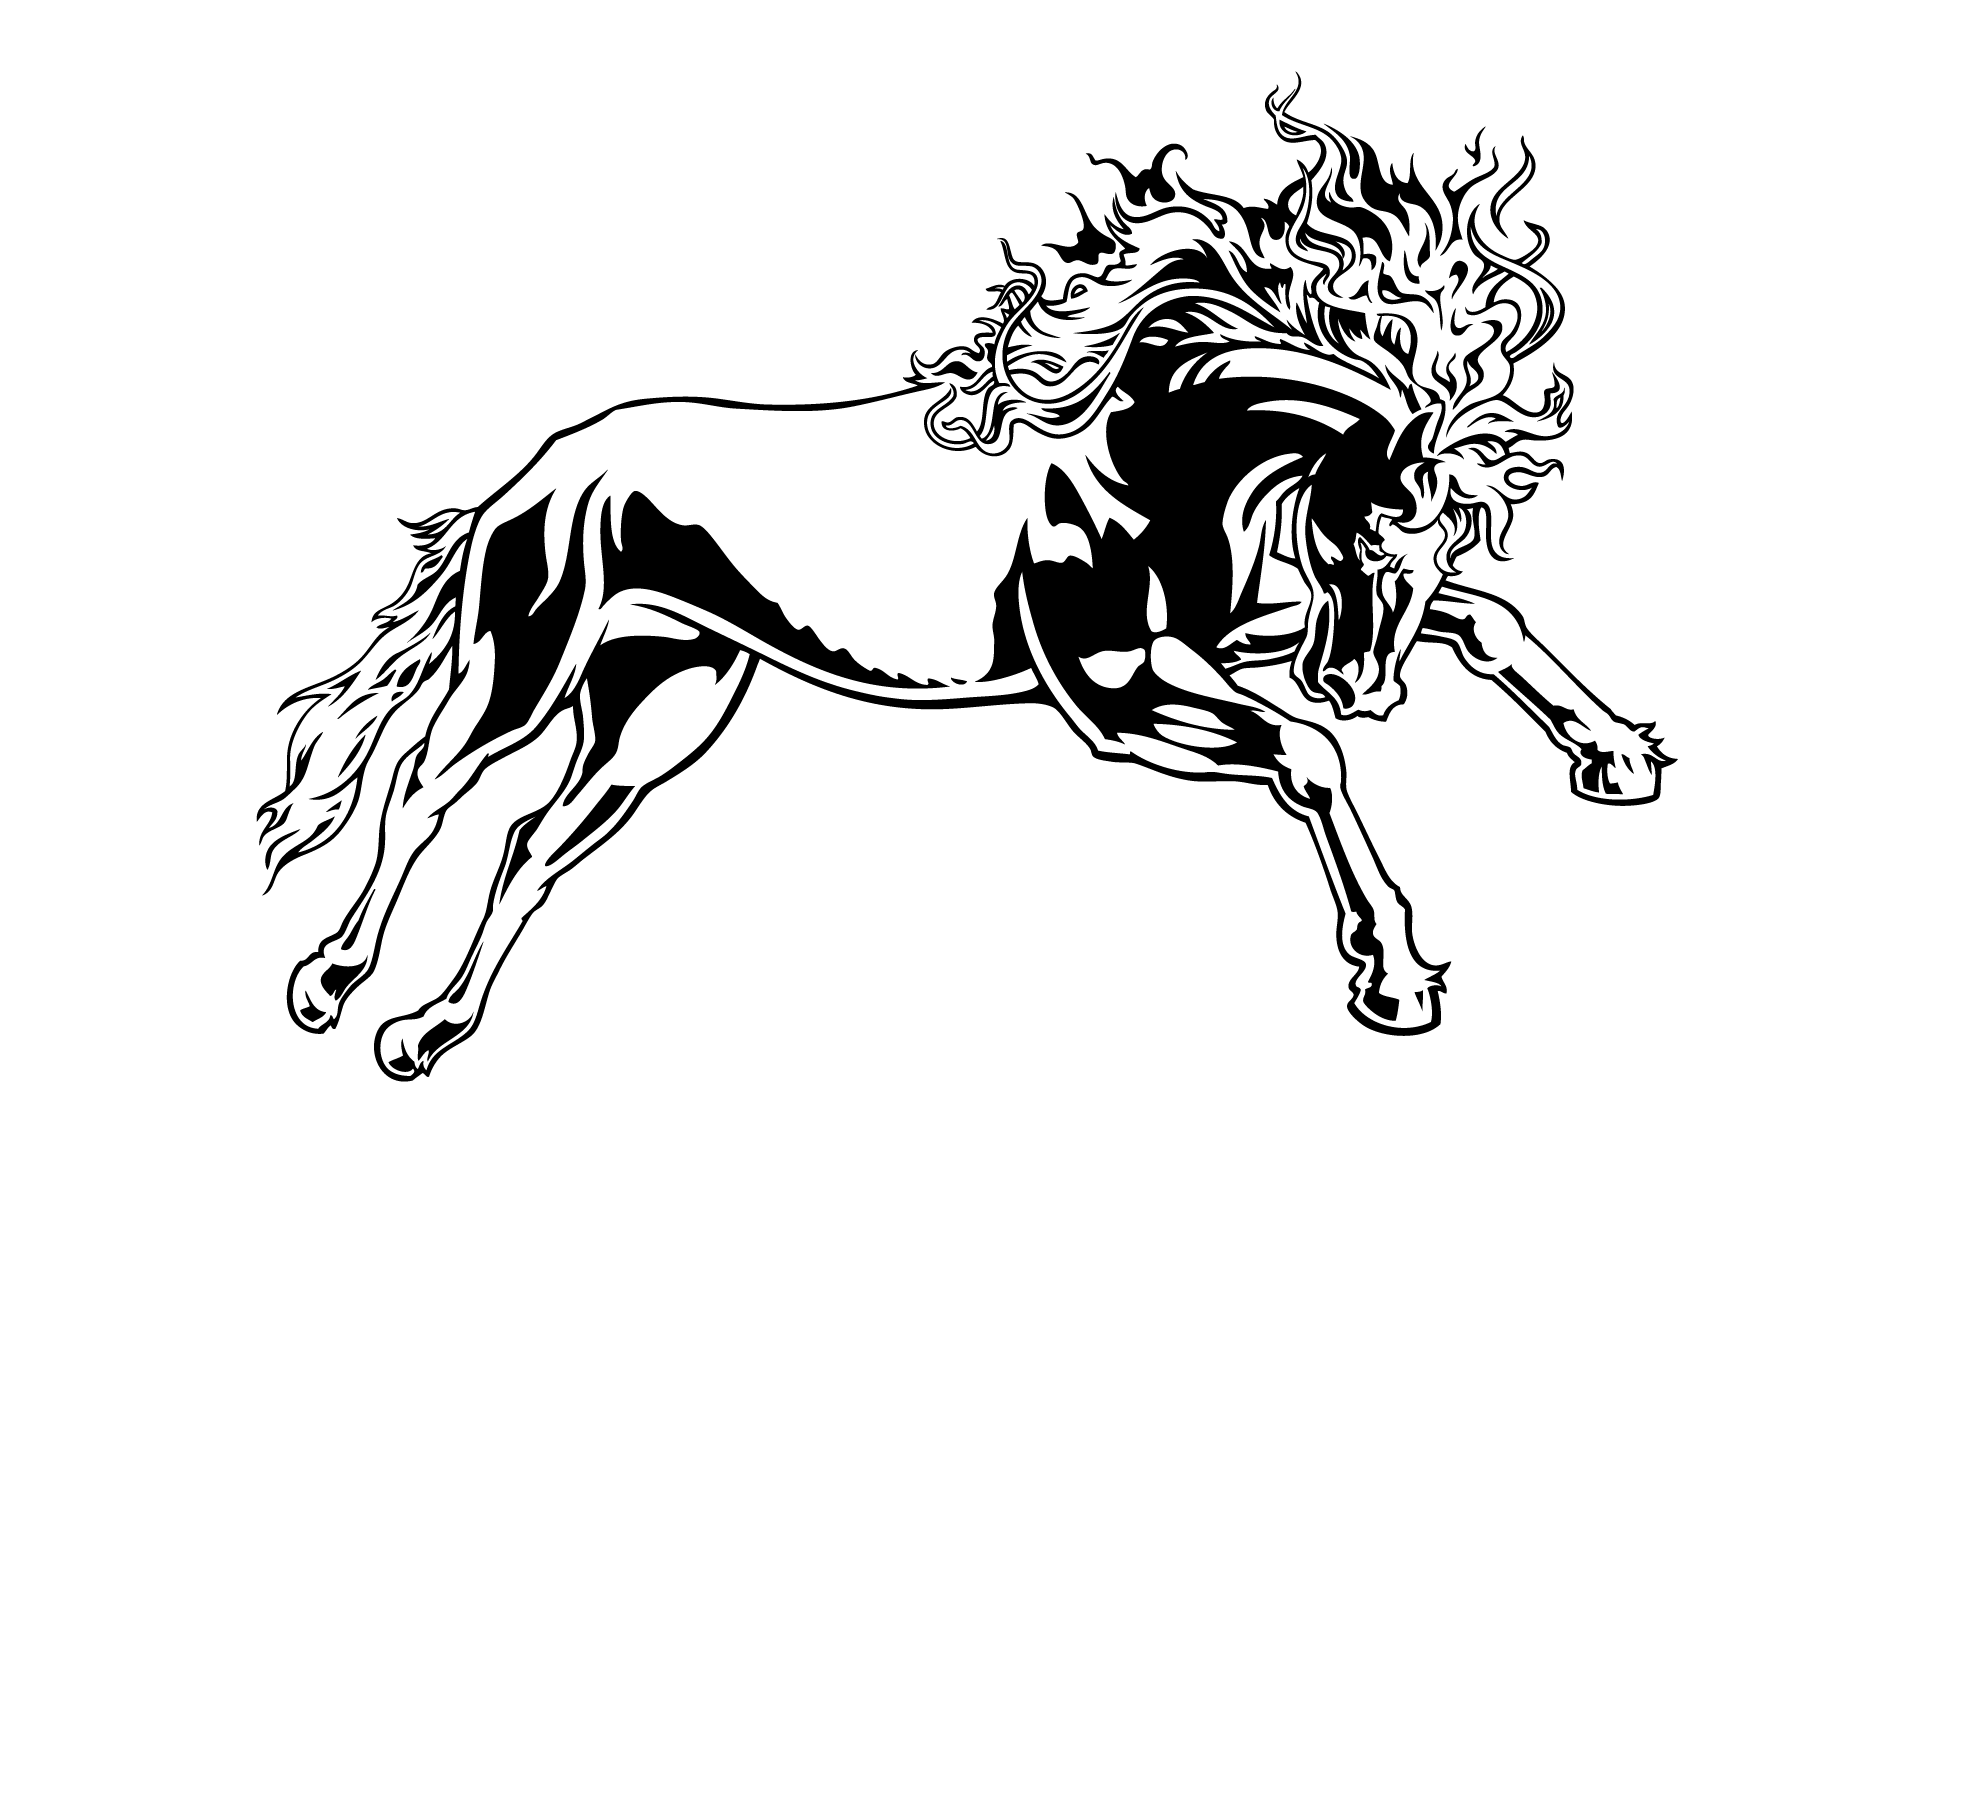 Arsenal Media